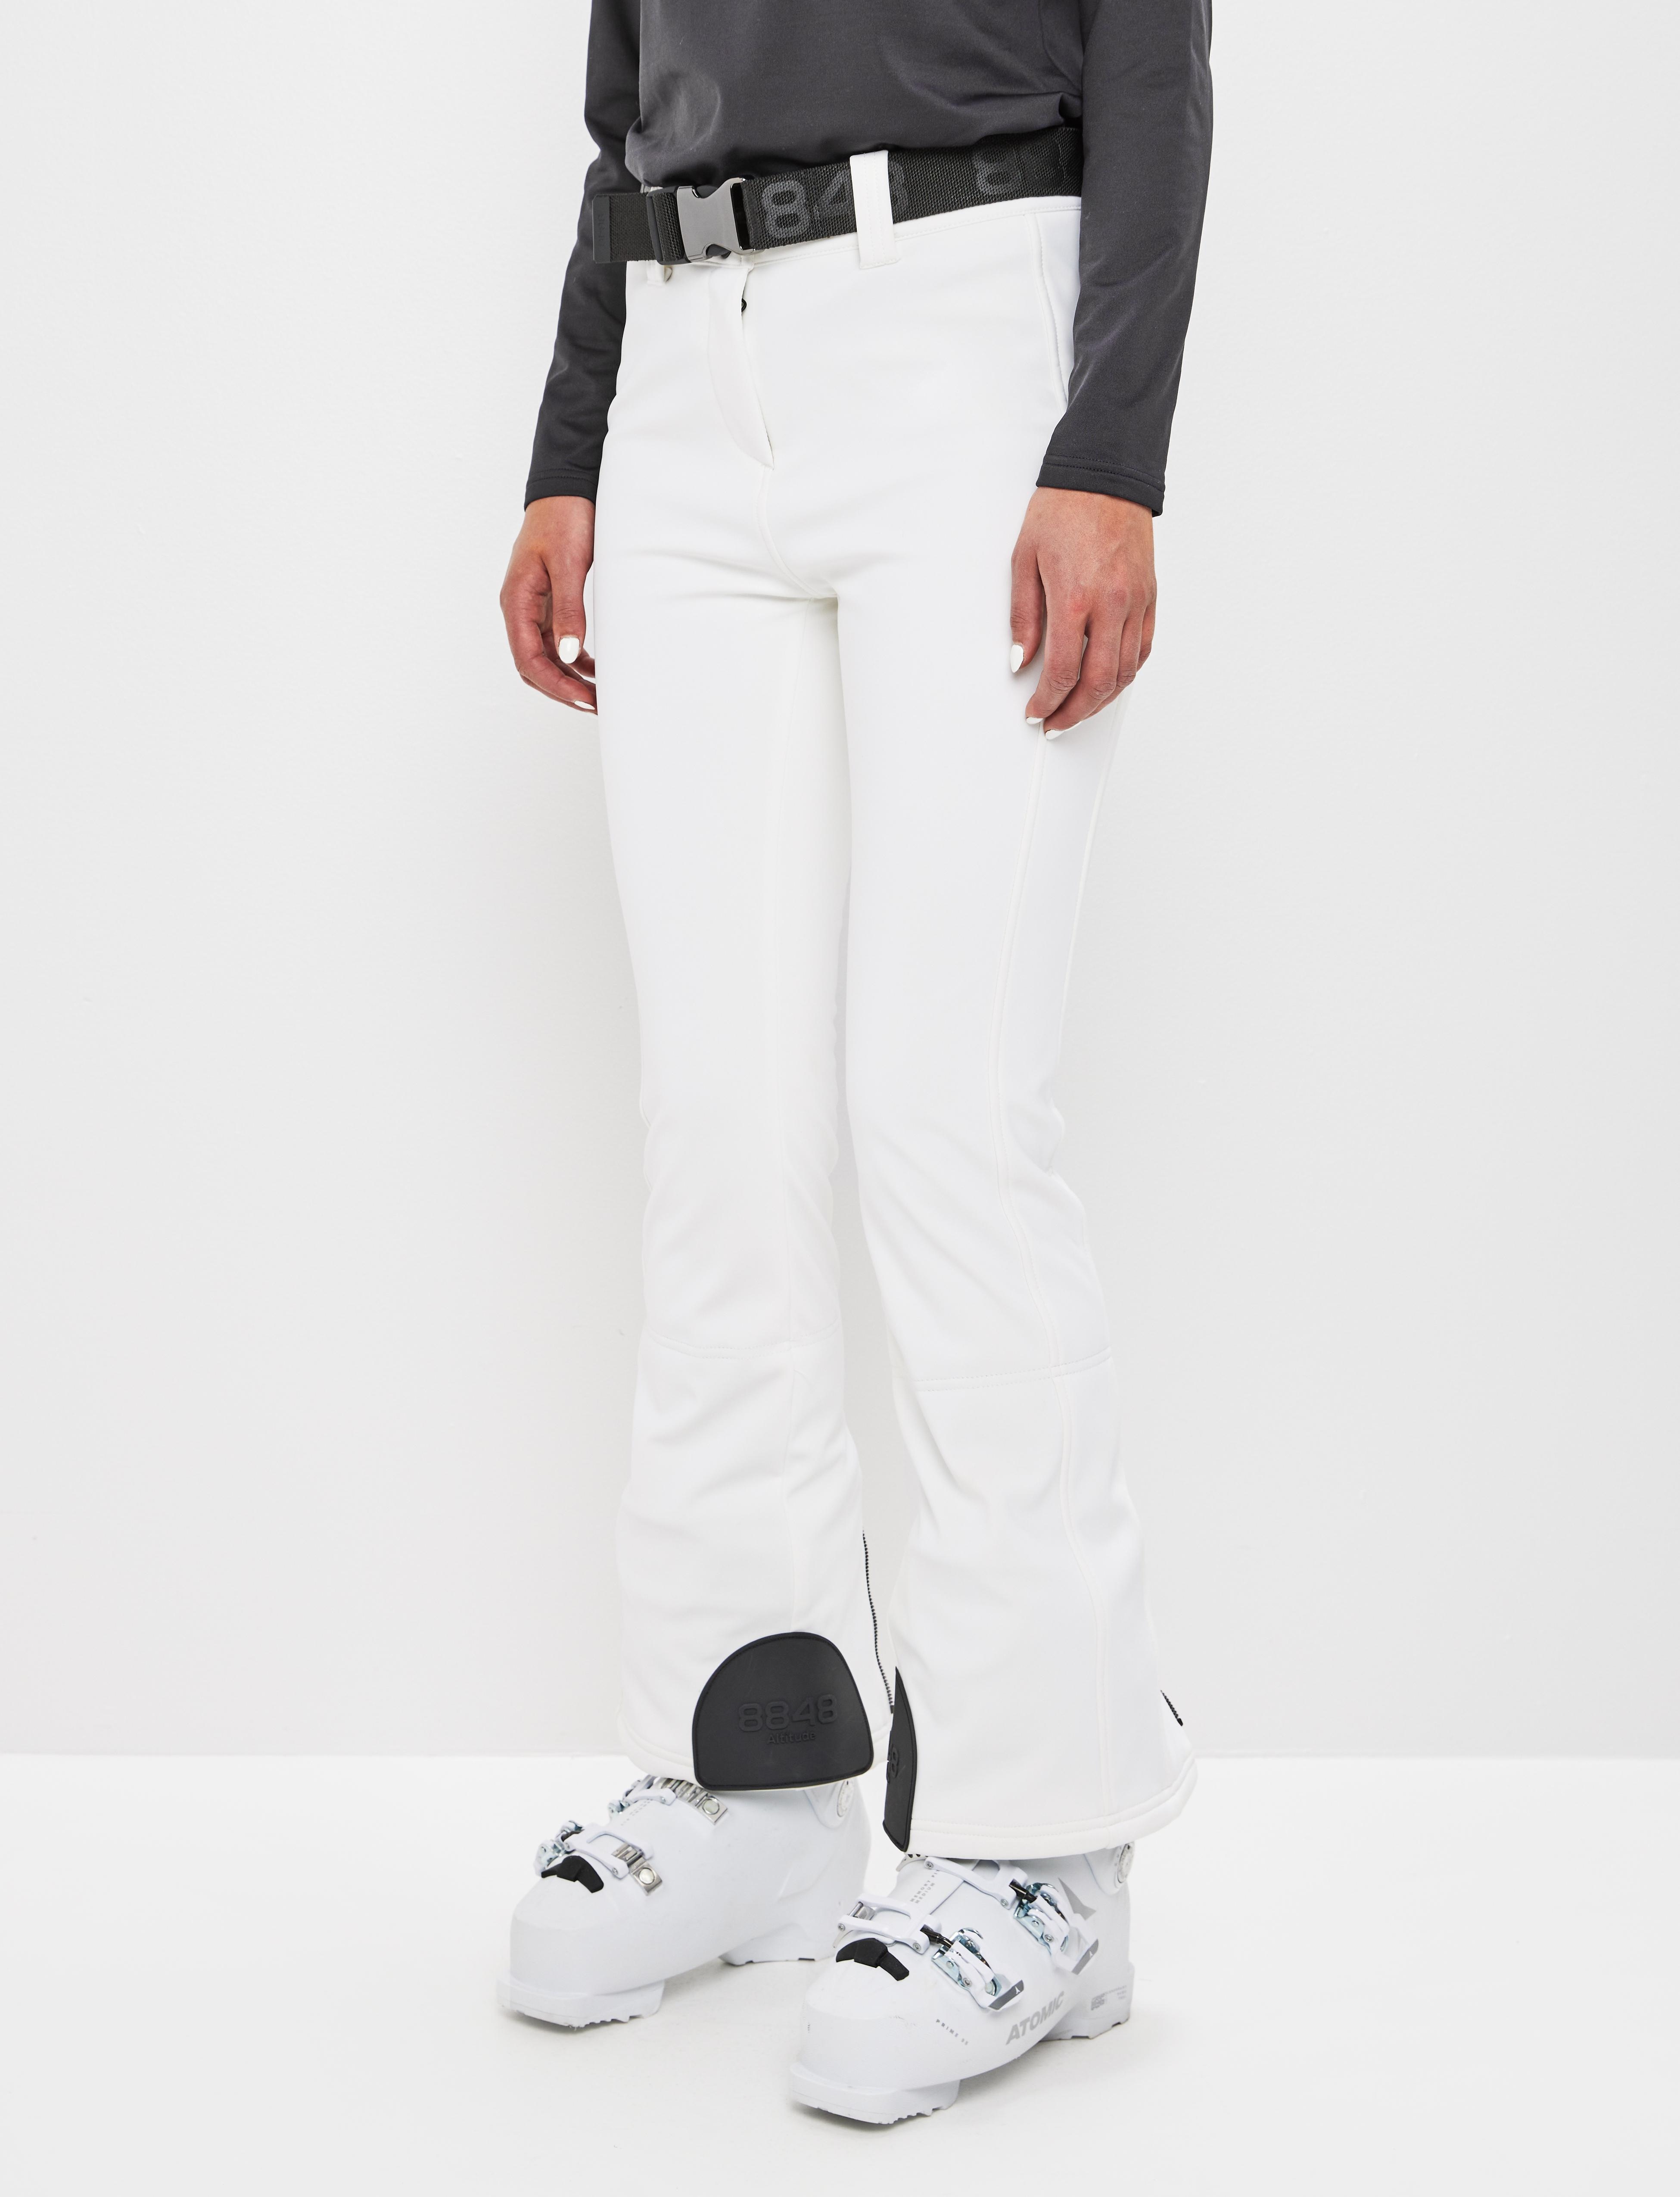 Tumblr W Pant Blanc - Vita skidbyxor dam slim modell